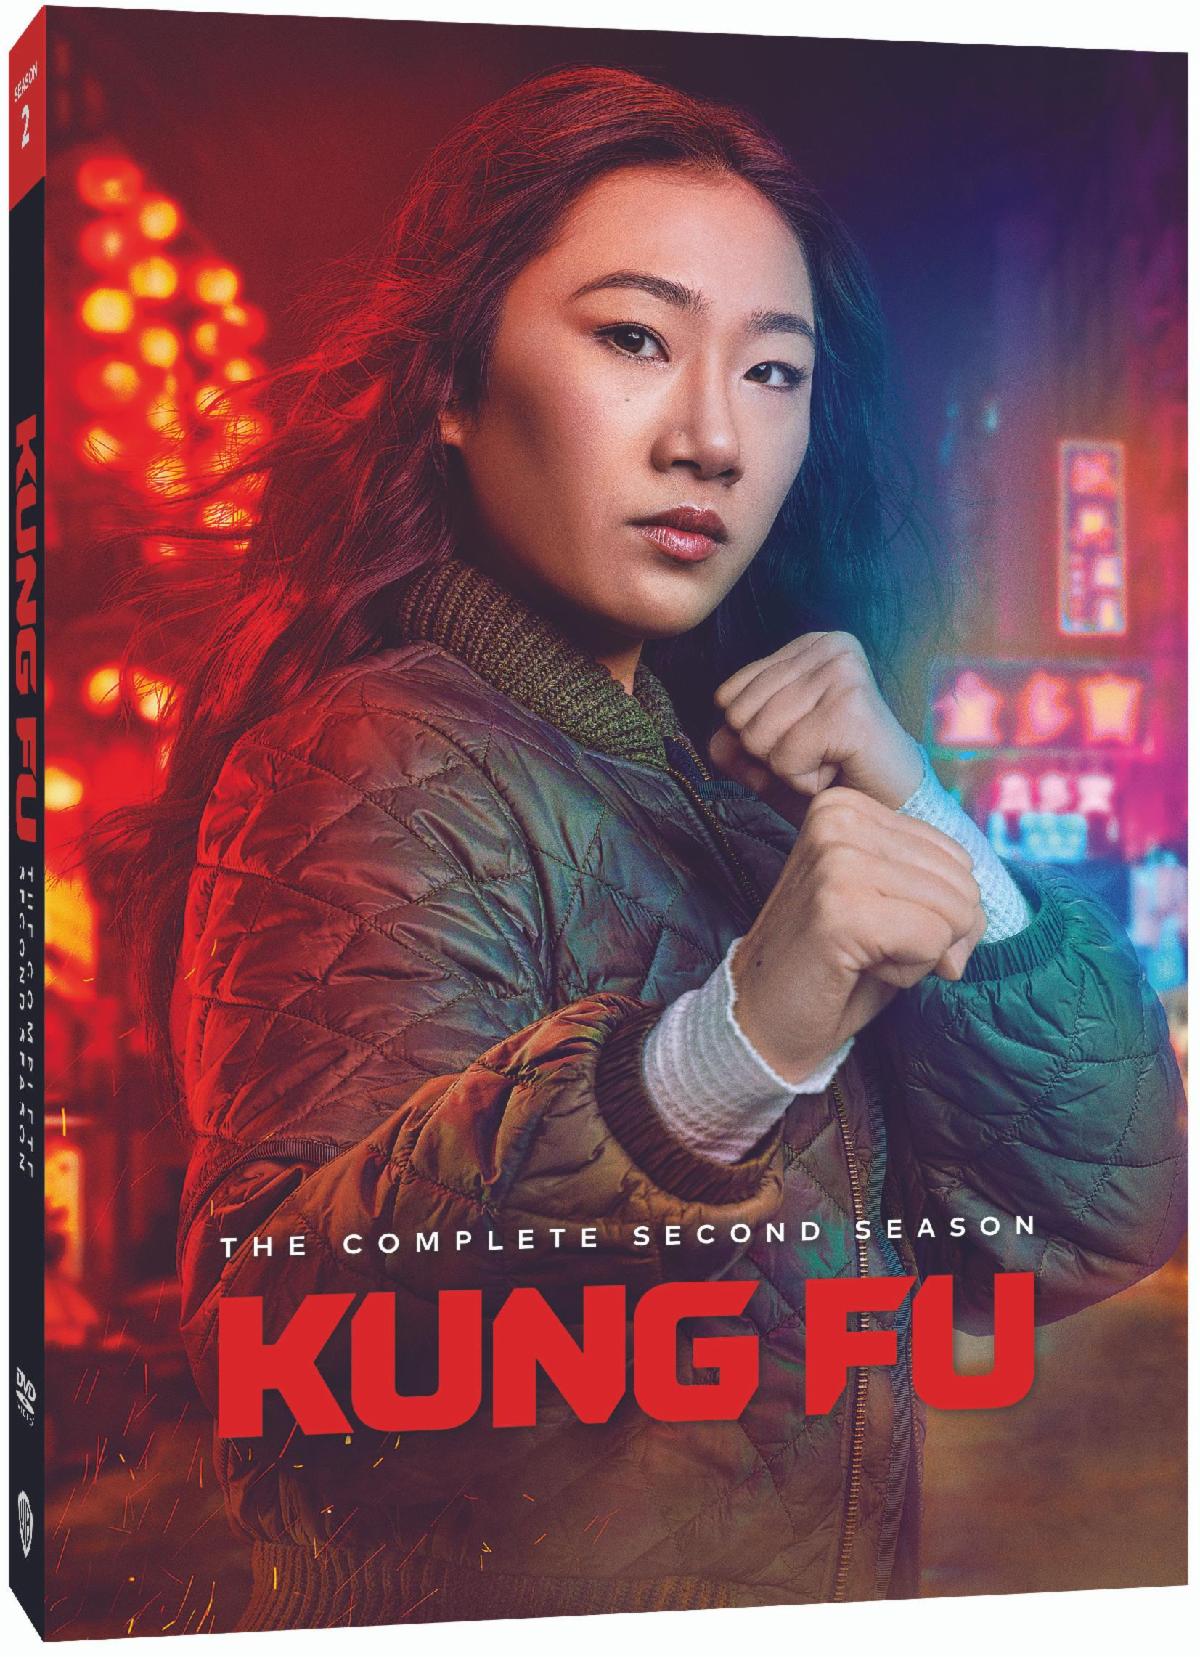 Kung Fu Season 2 Blu-ray Review